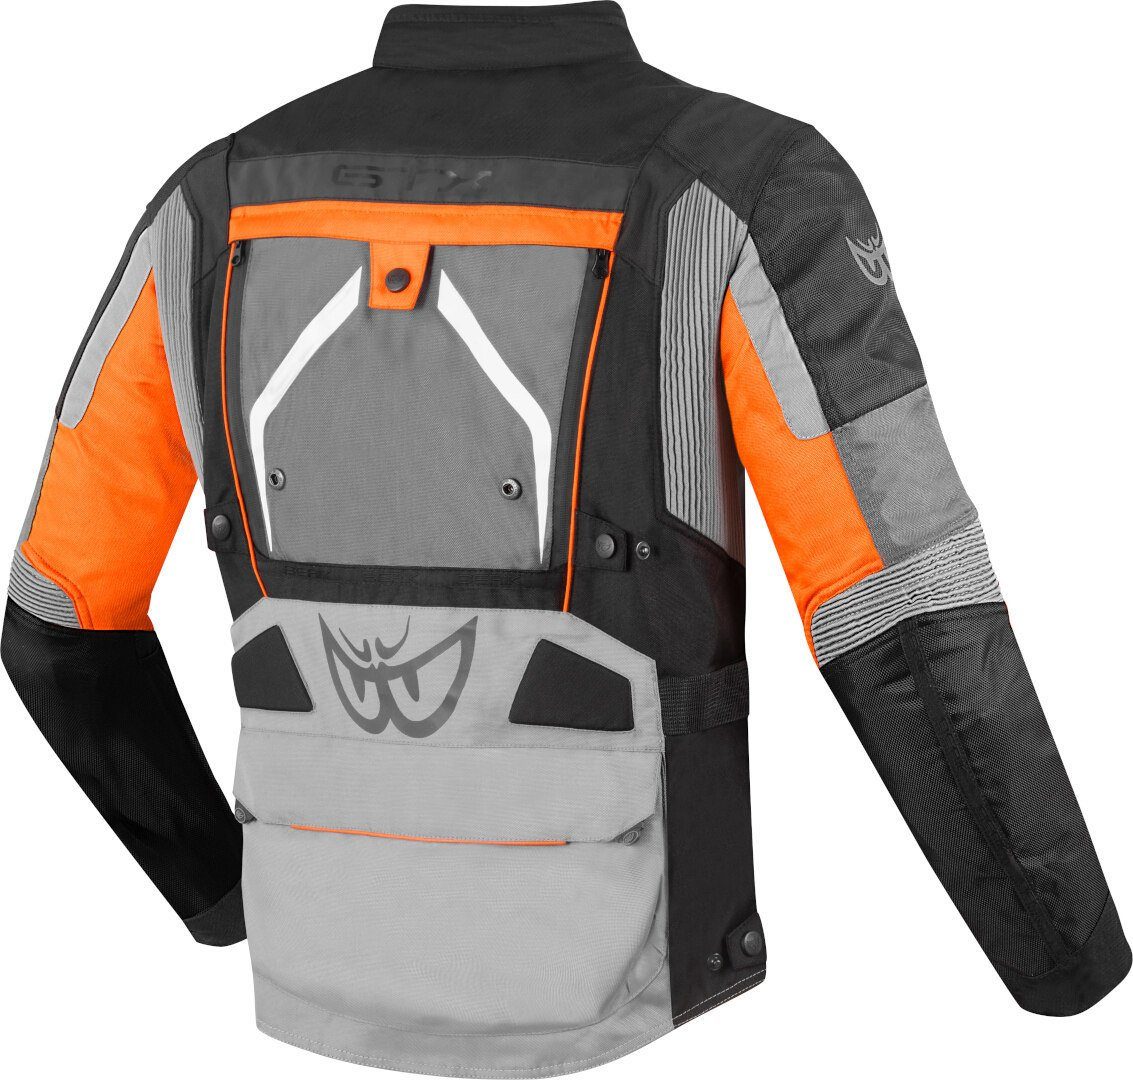 Black/Grey/Orange Motorradjacke Safari Berik Motorrad 3in1 wasserdichte Textiljacke